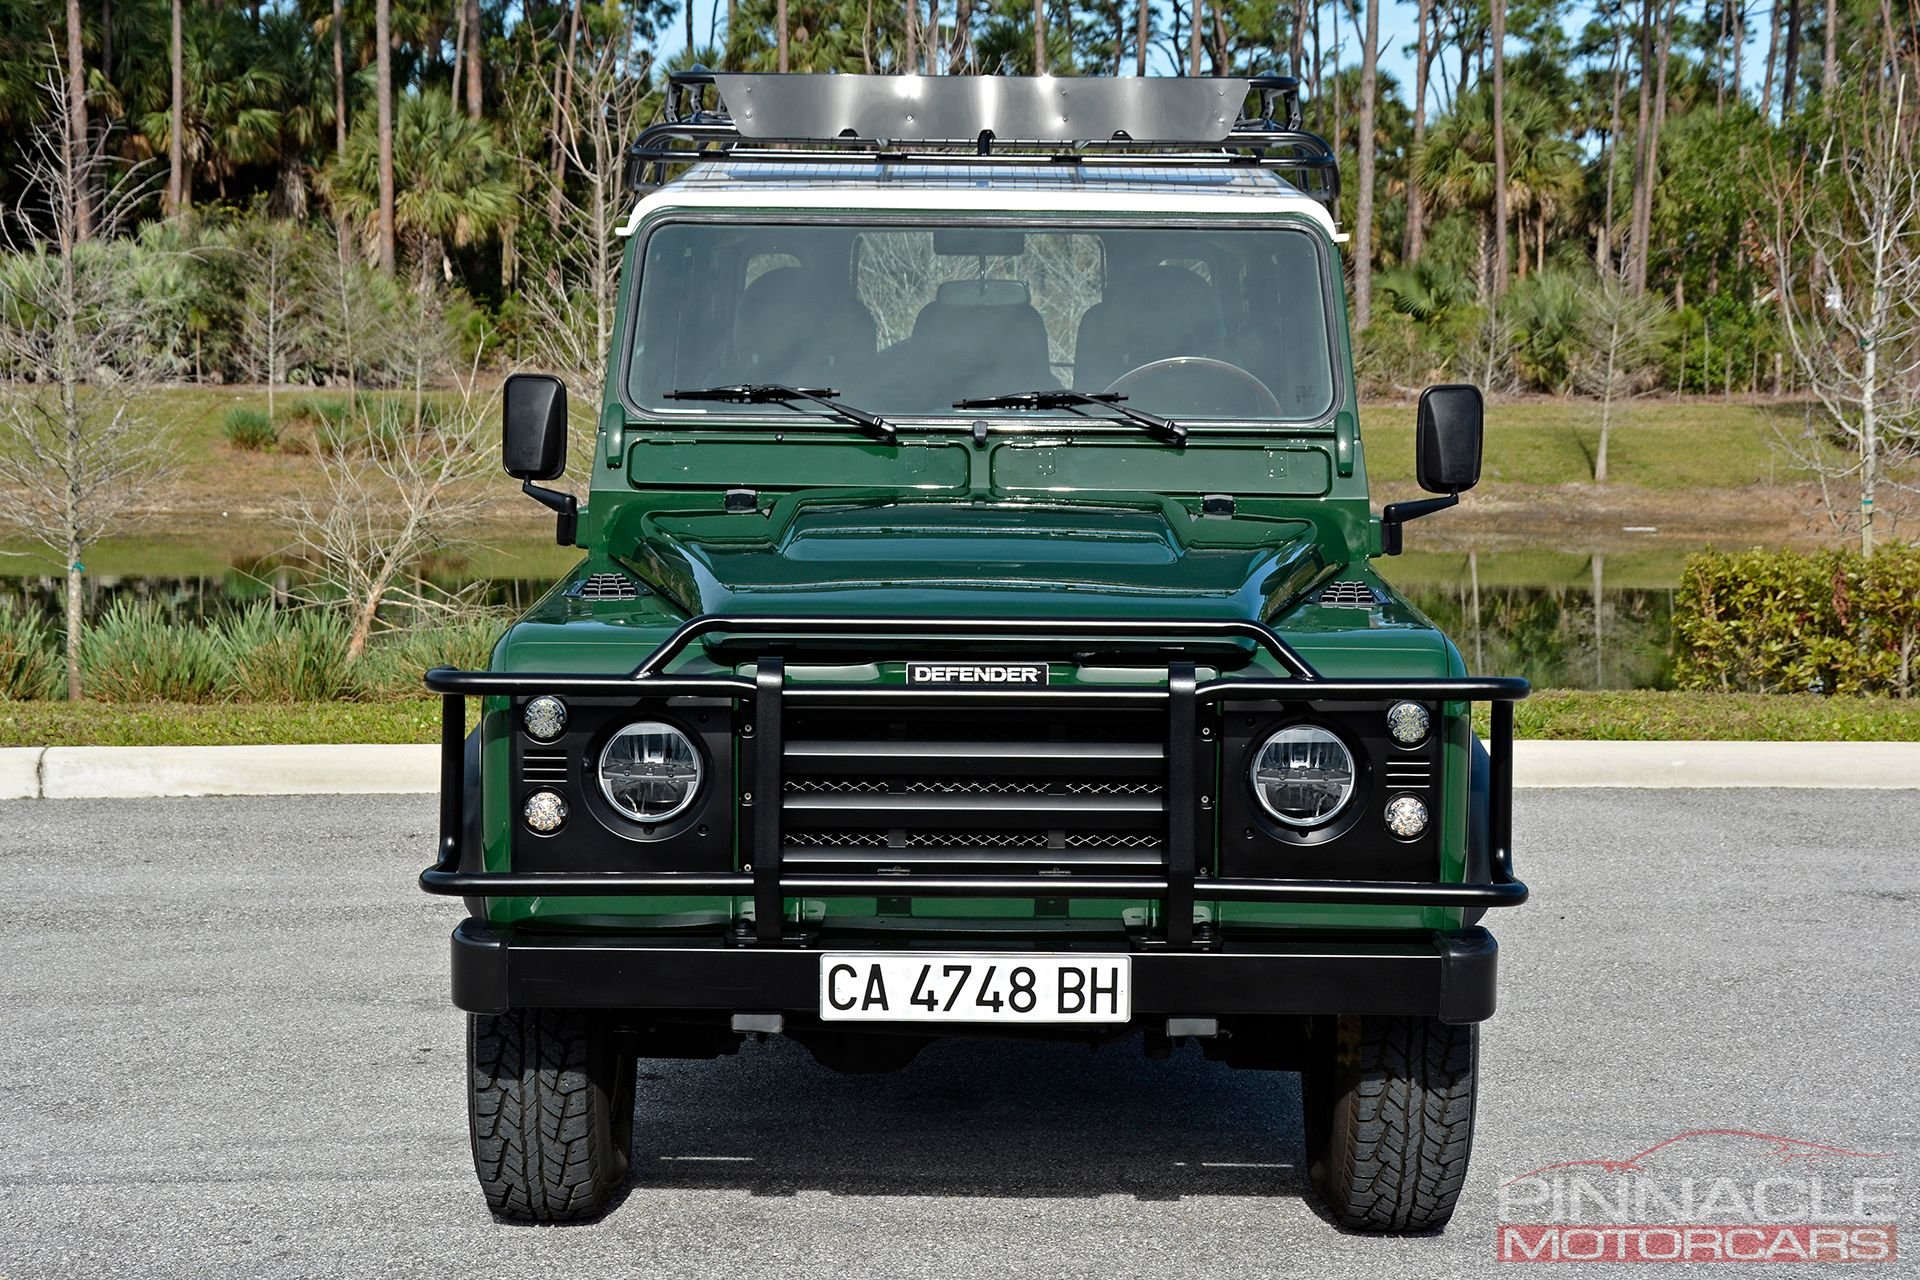 30134143 | 1998 Land Rover Defender 110 | Pinnacle Motorcars